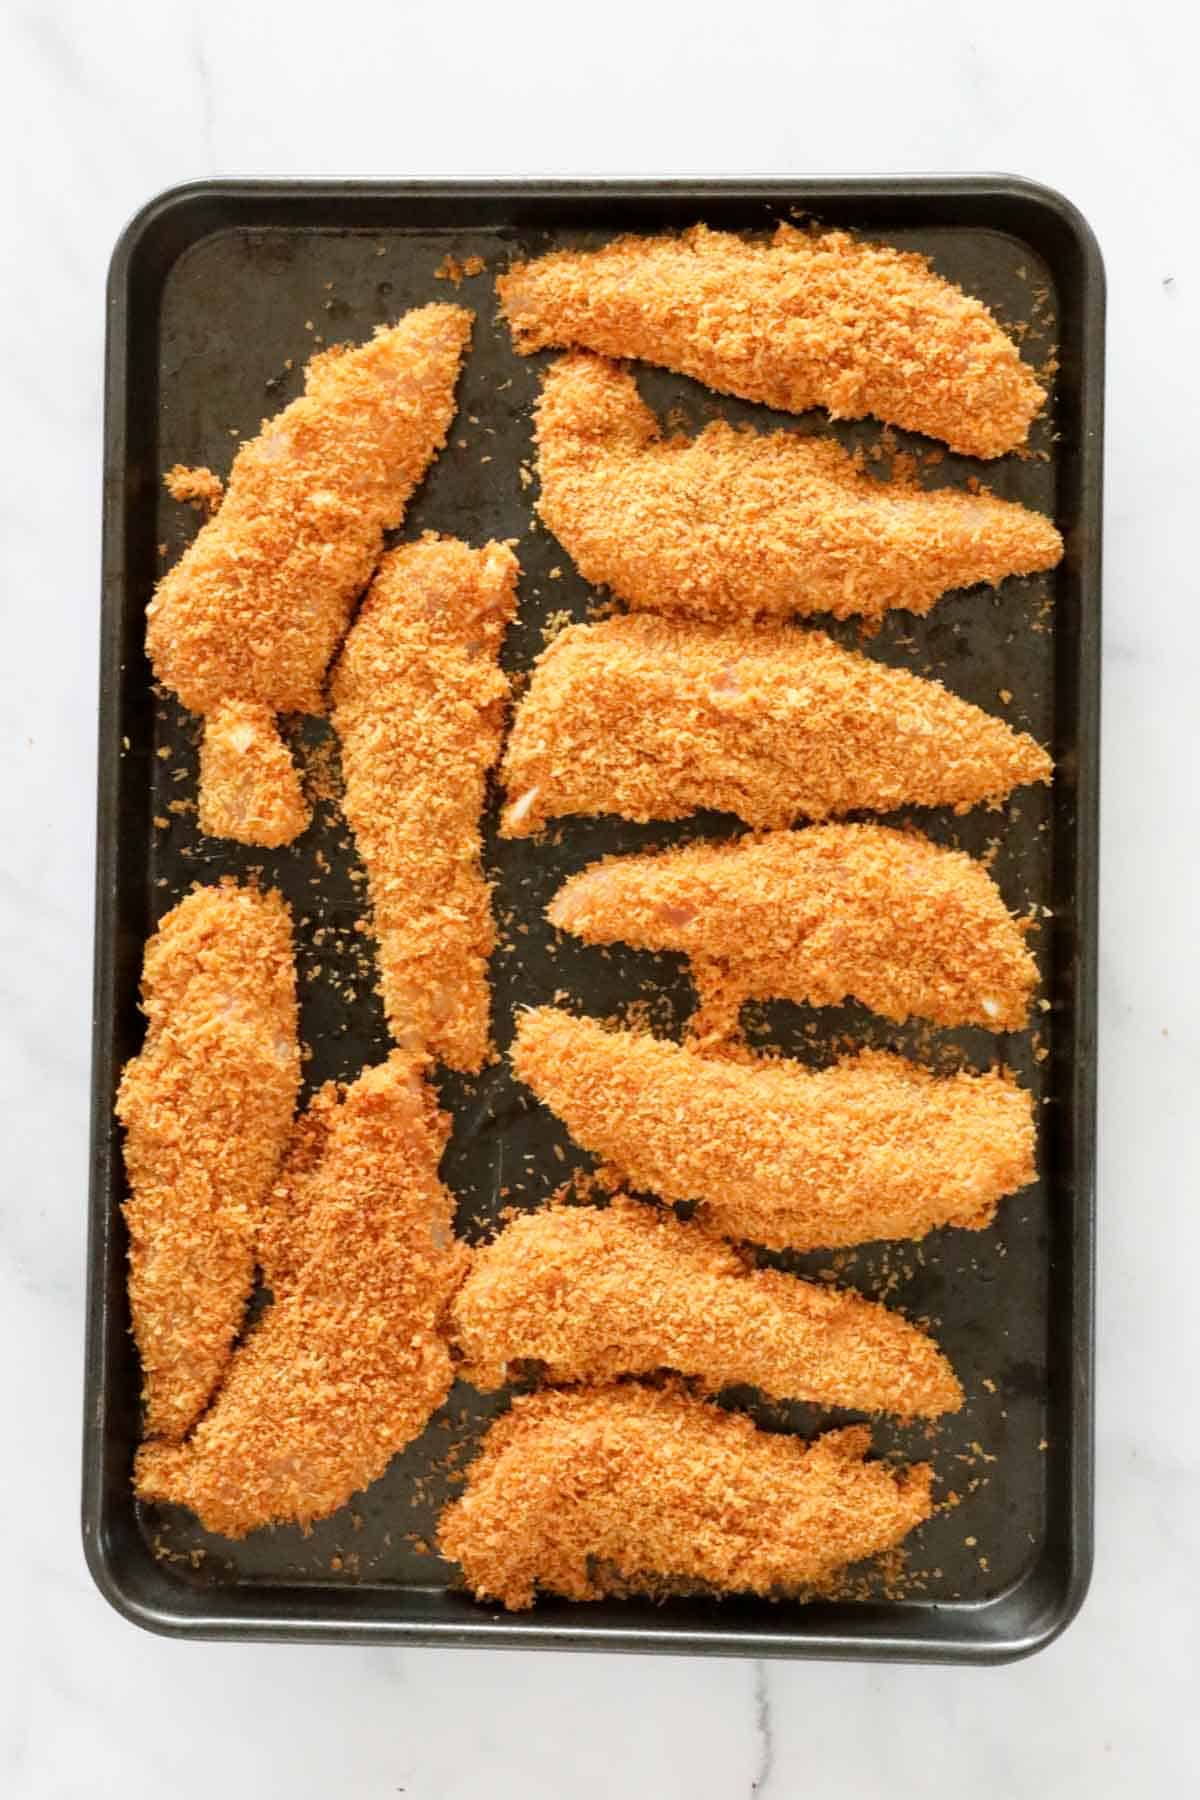 Baked chicken tenderloins on a baking tray.